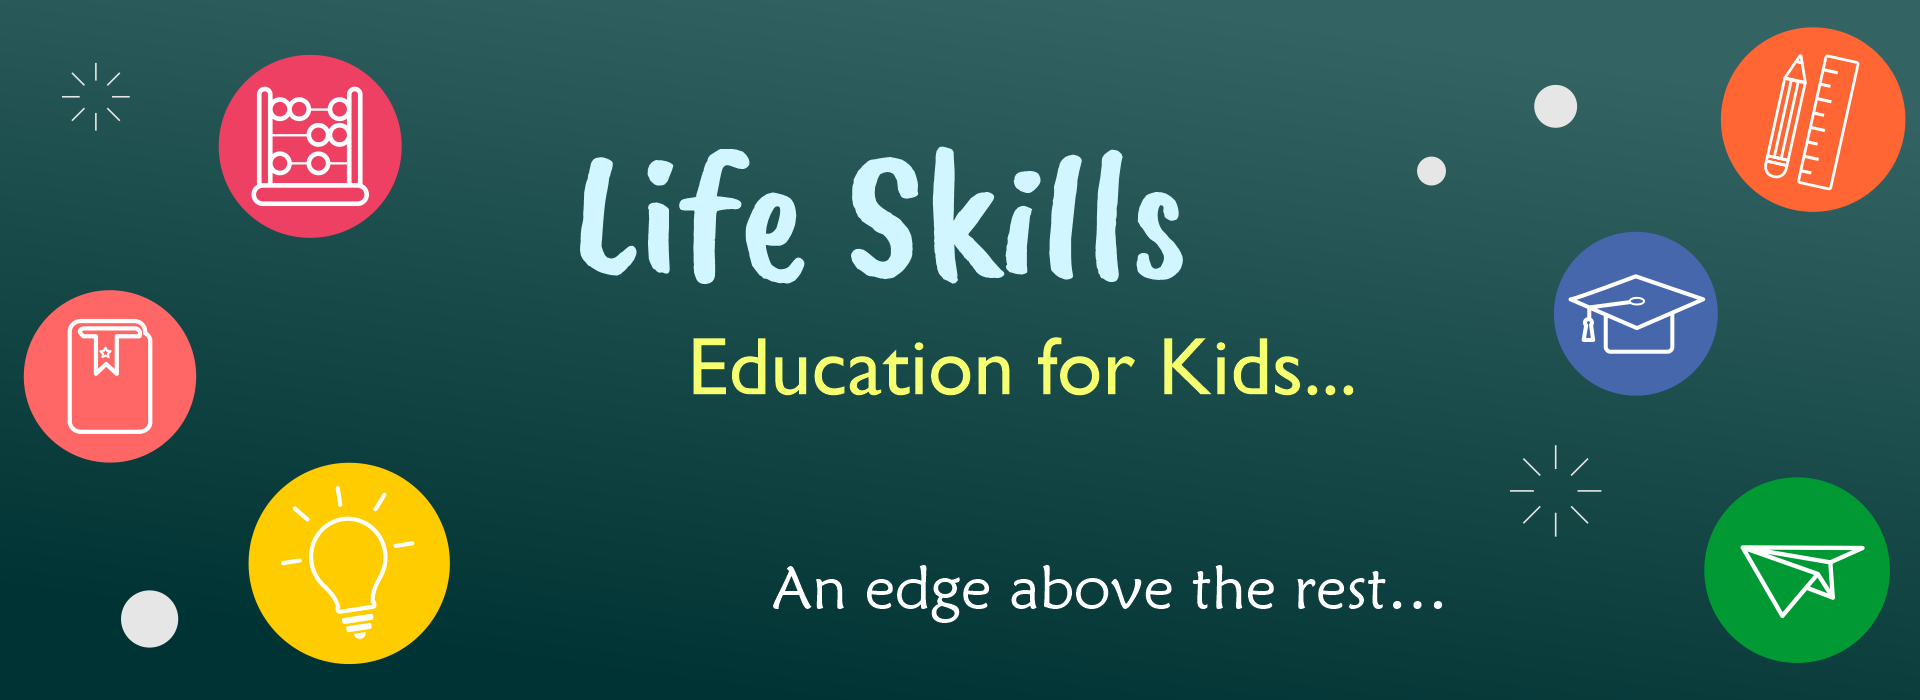 the history of life skills education